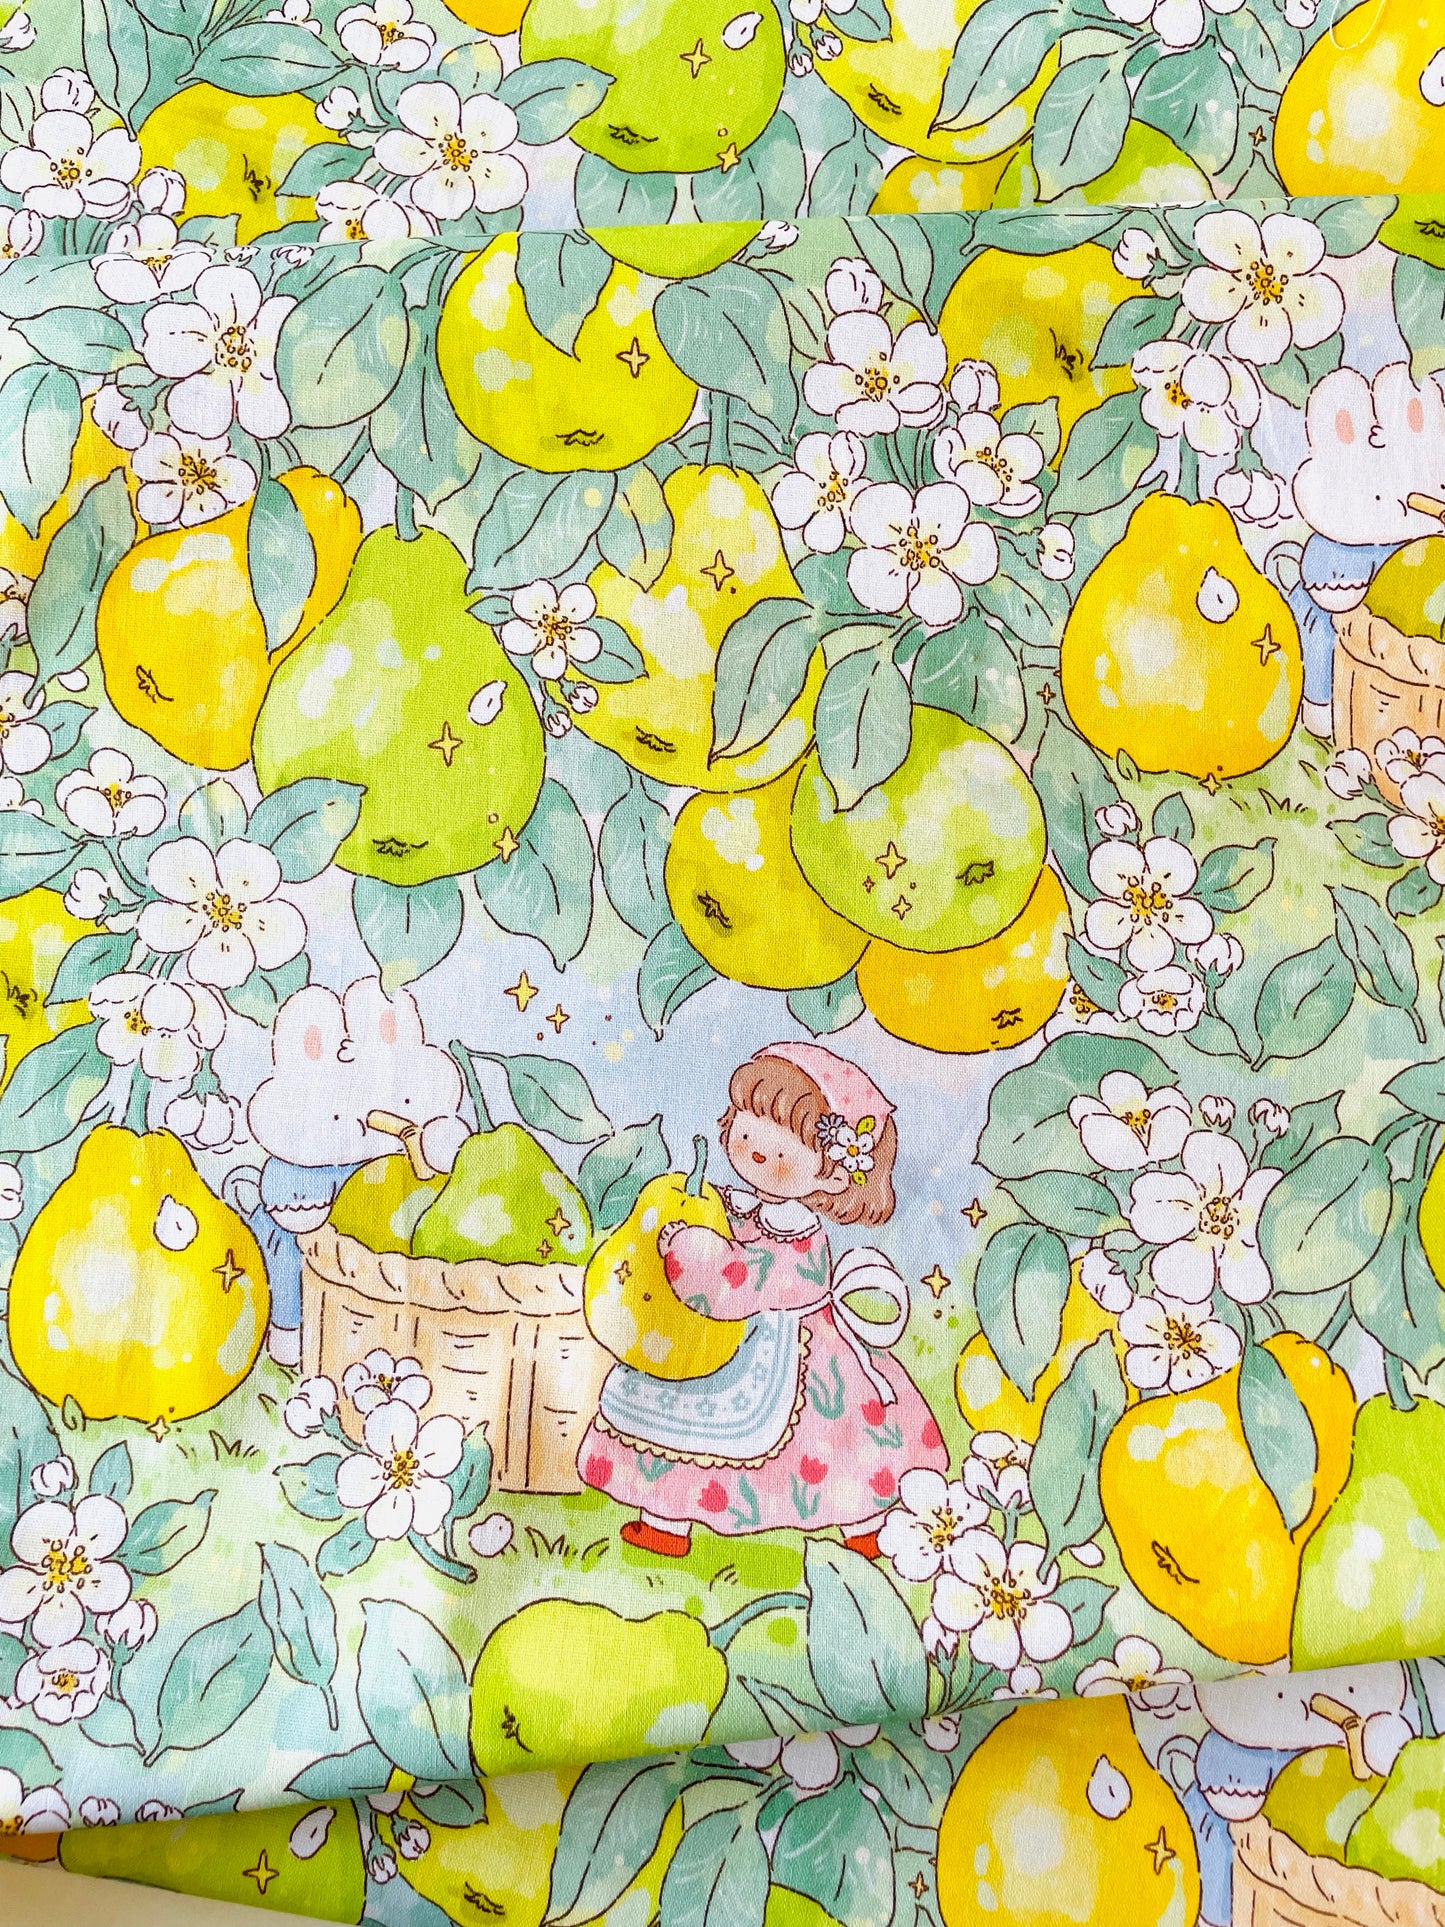 Orchard Girl